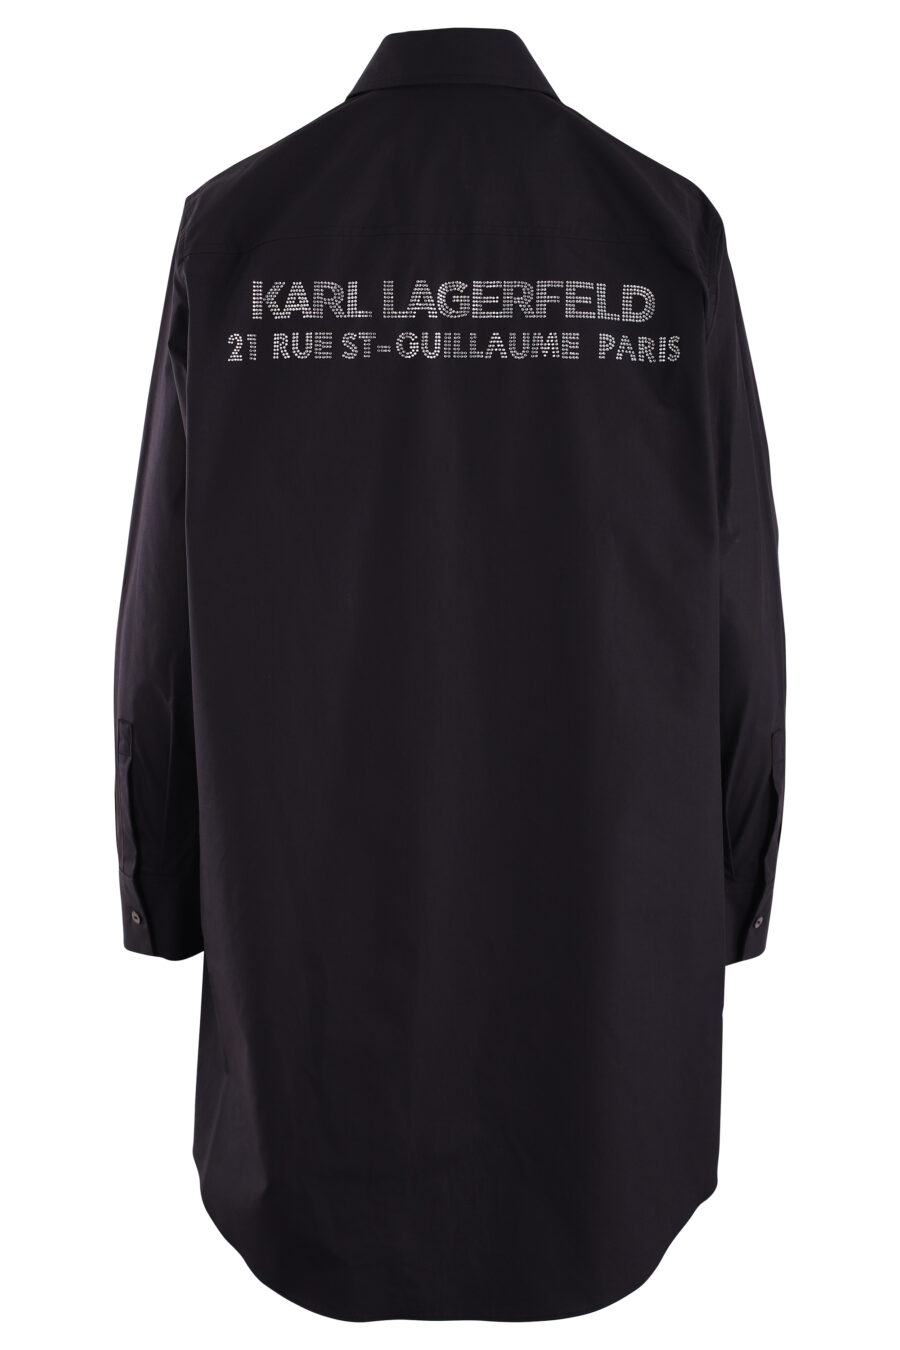 Longue chemise noire avec logo strass - IMG 3084